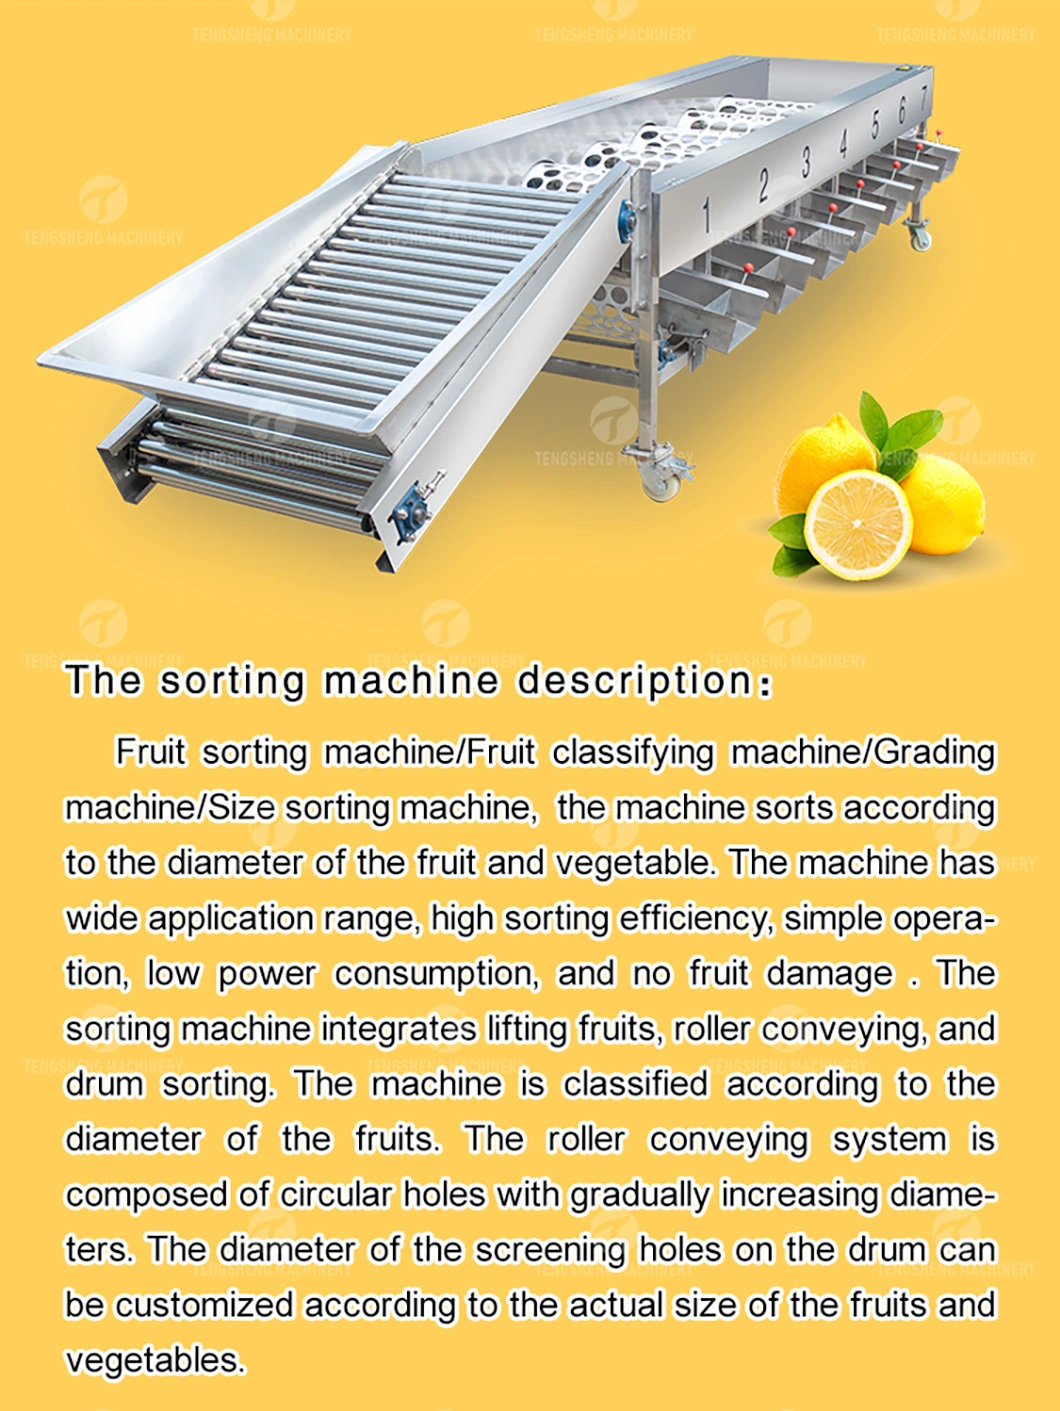 Passion Fruit Apple Pear Kiwi Fruit Sorting Machine Potato Grading Machine Food Processing Machine (TS-FS670)